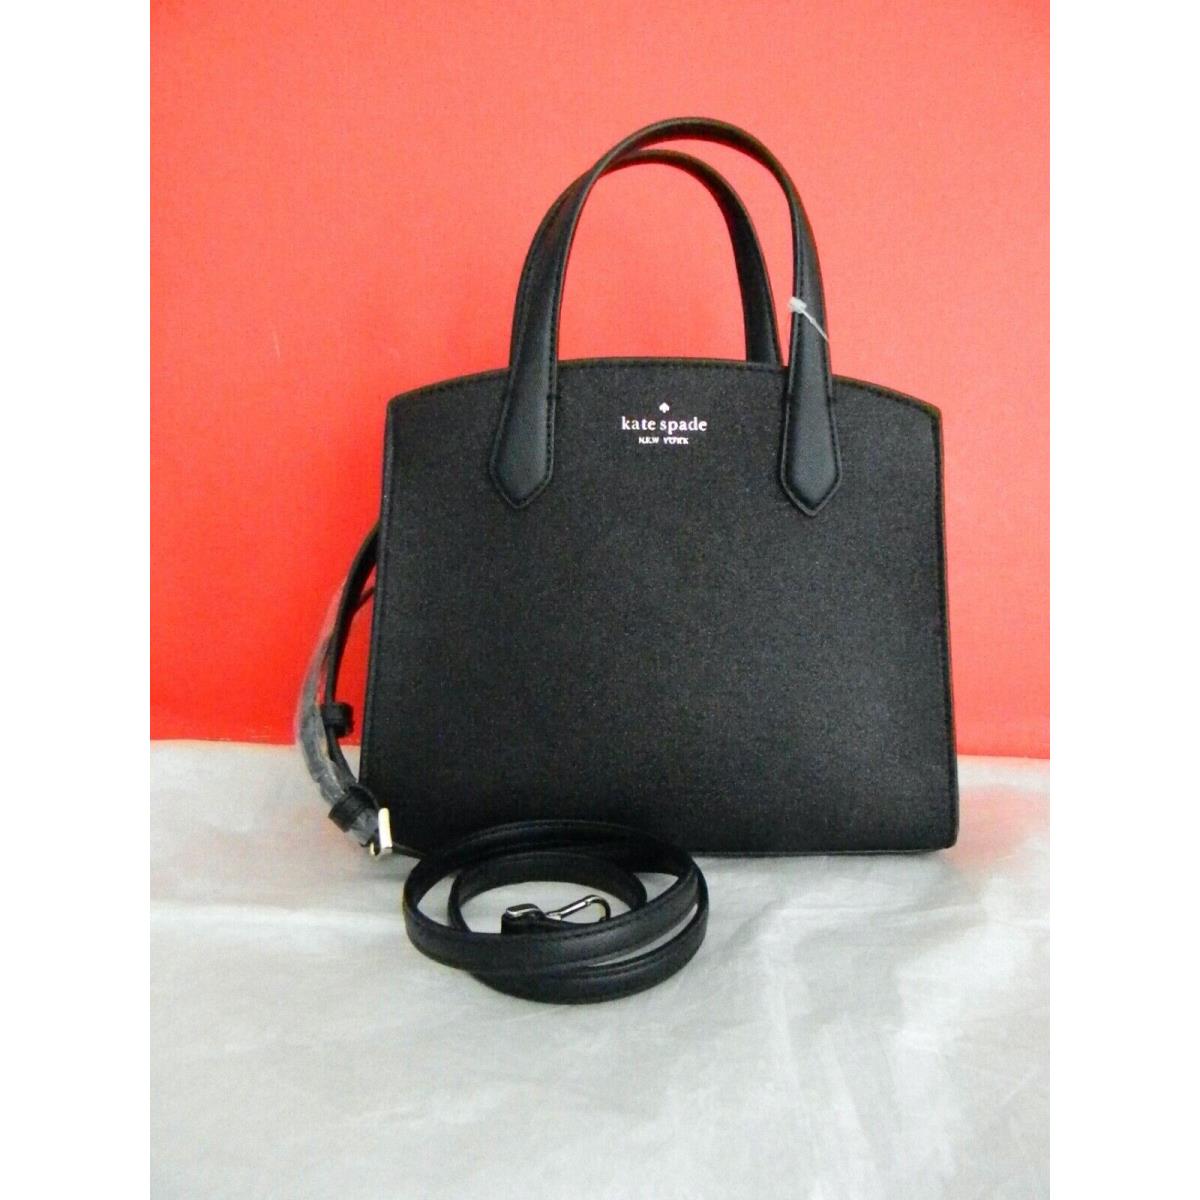 Kate Spade New York Tinsel Black Glitter Fabric Satchel K9337 - Kate Spade  bag - 073402087443 | Fash Brands